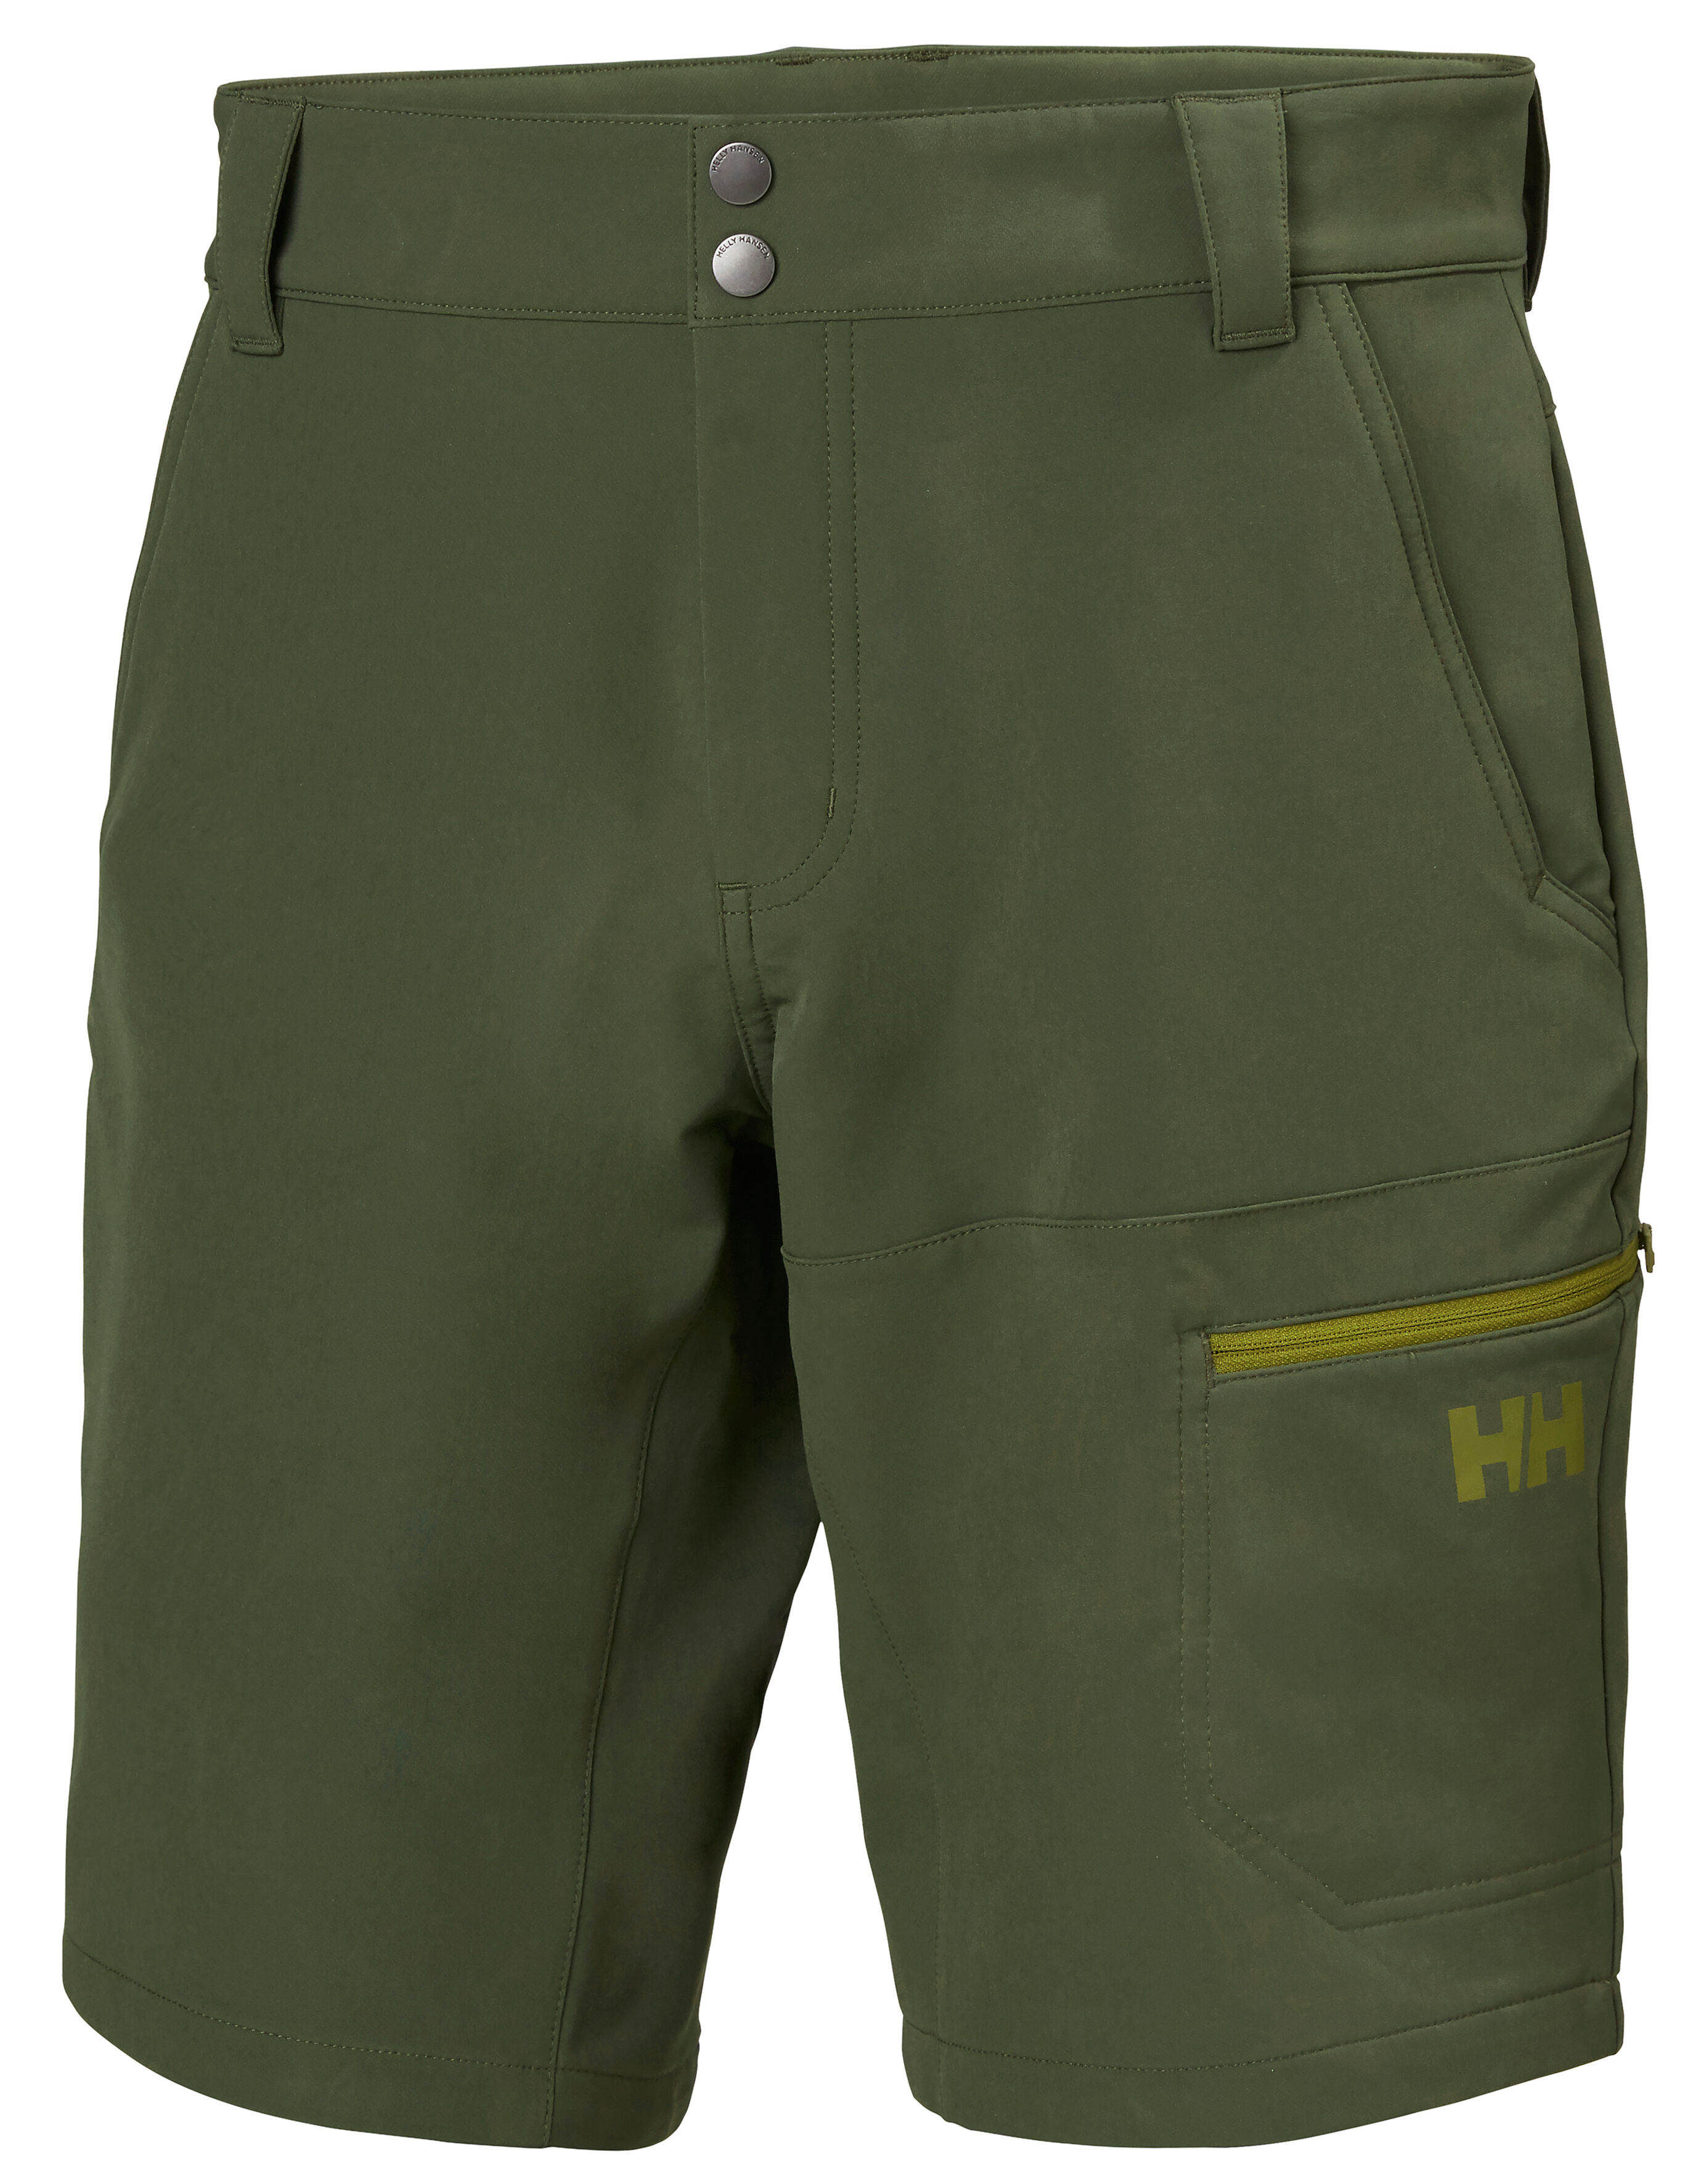 Helly Hansen Brono Shorts - Hiking shorts - Men's